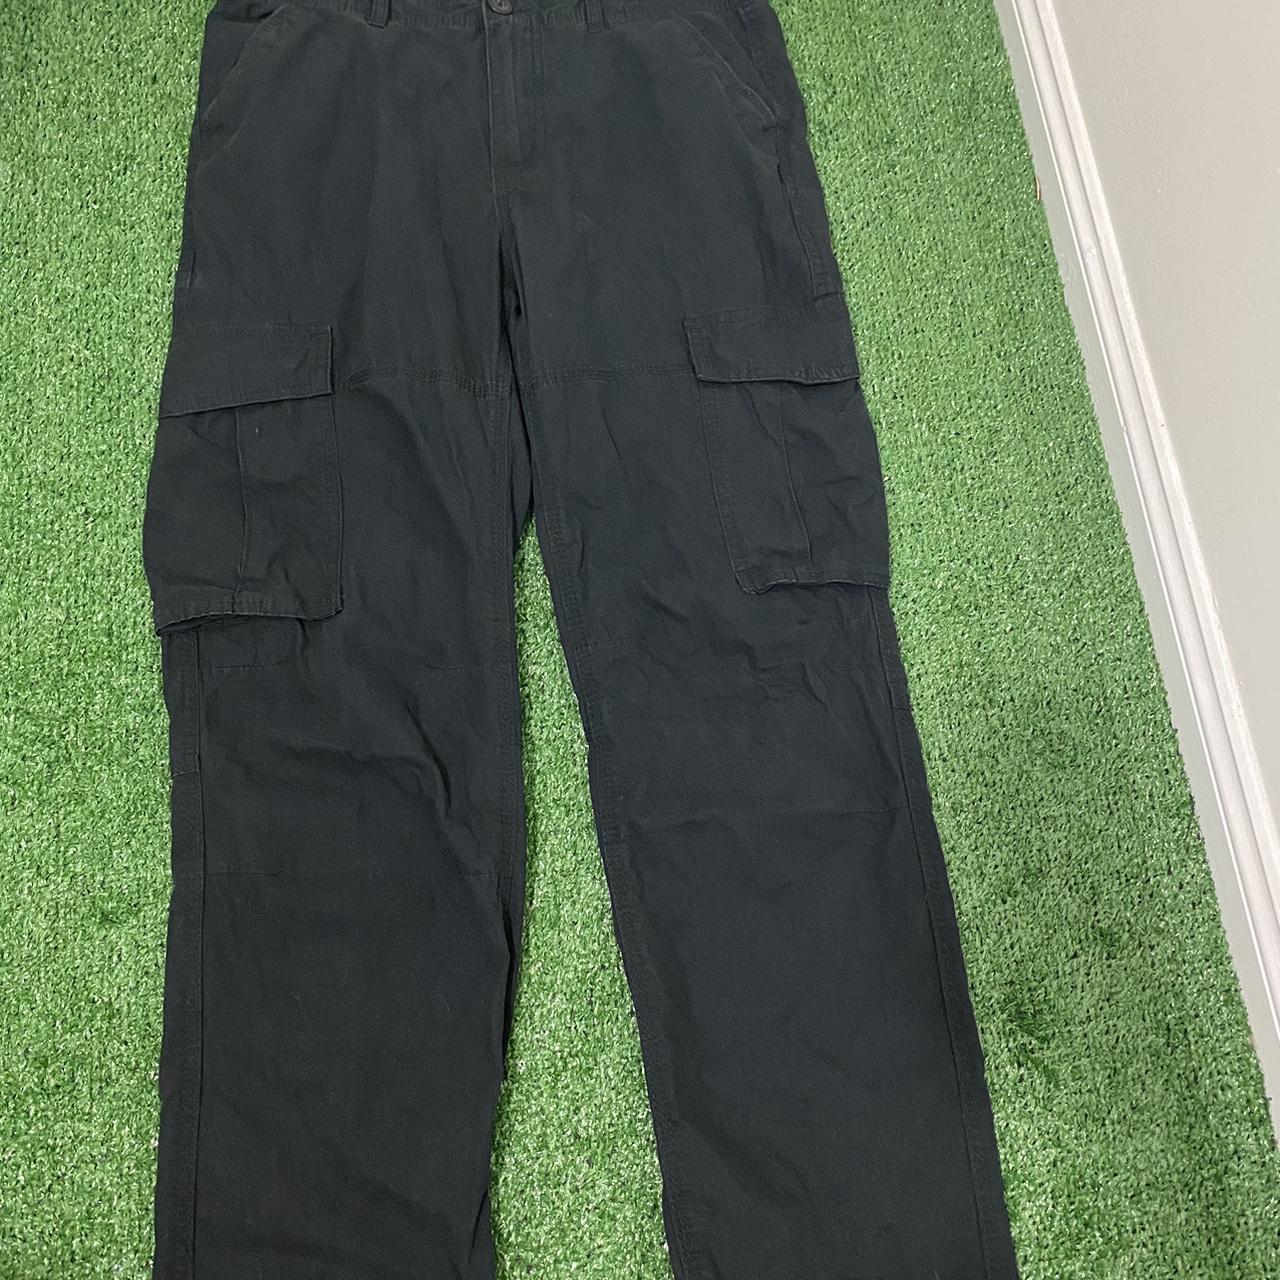 Black cargo pants - person in photos is 170.6 cm - Depop